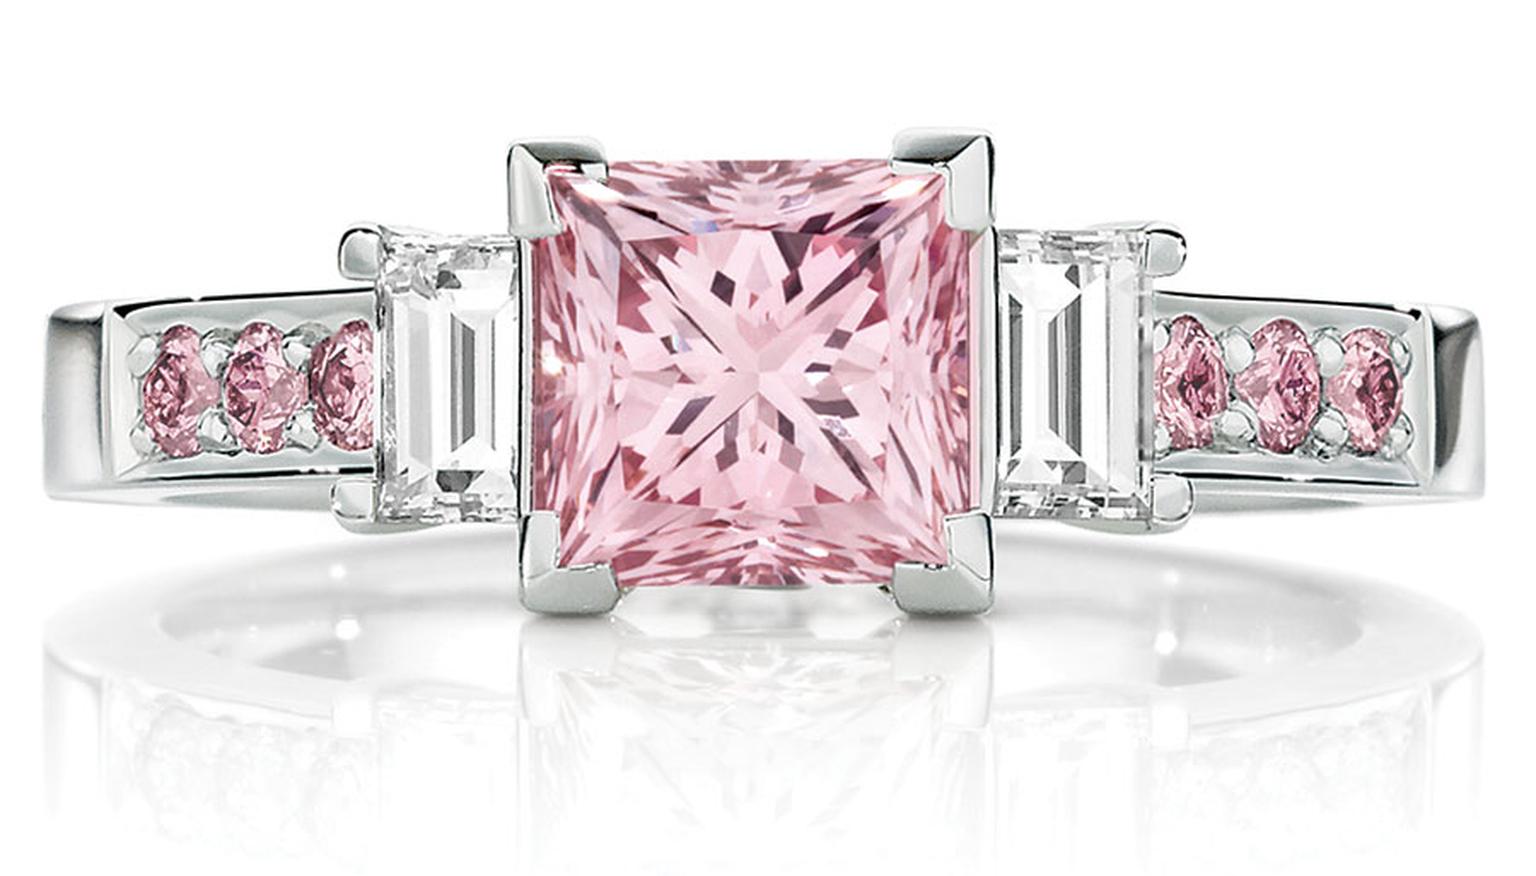 Calleija The Pink Princess engagement ring in platinum, set with 1.52ct natural Australian Argyle Pink diamonds (POA)